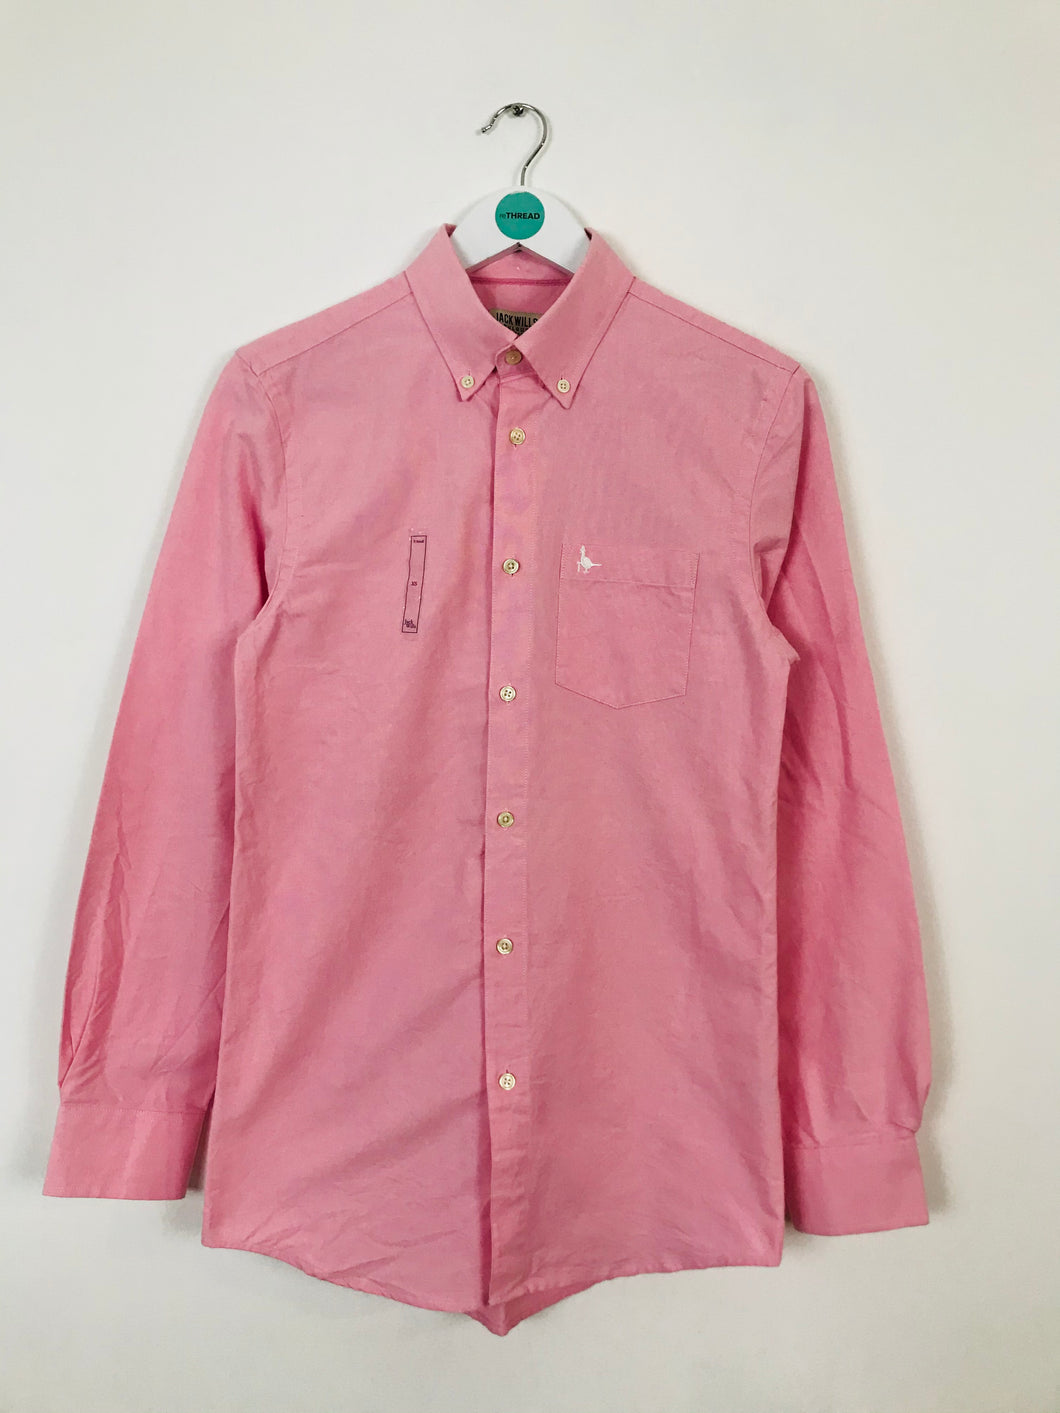 Jack Wills Mens Shirt | XS | Pink